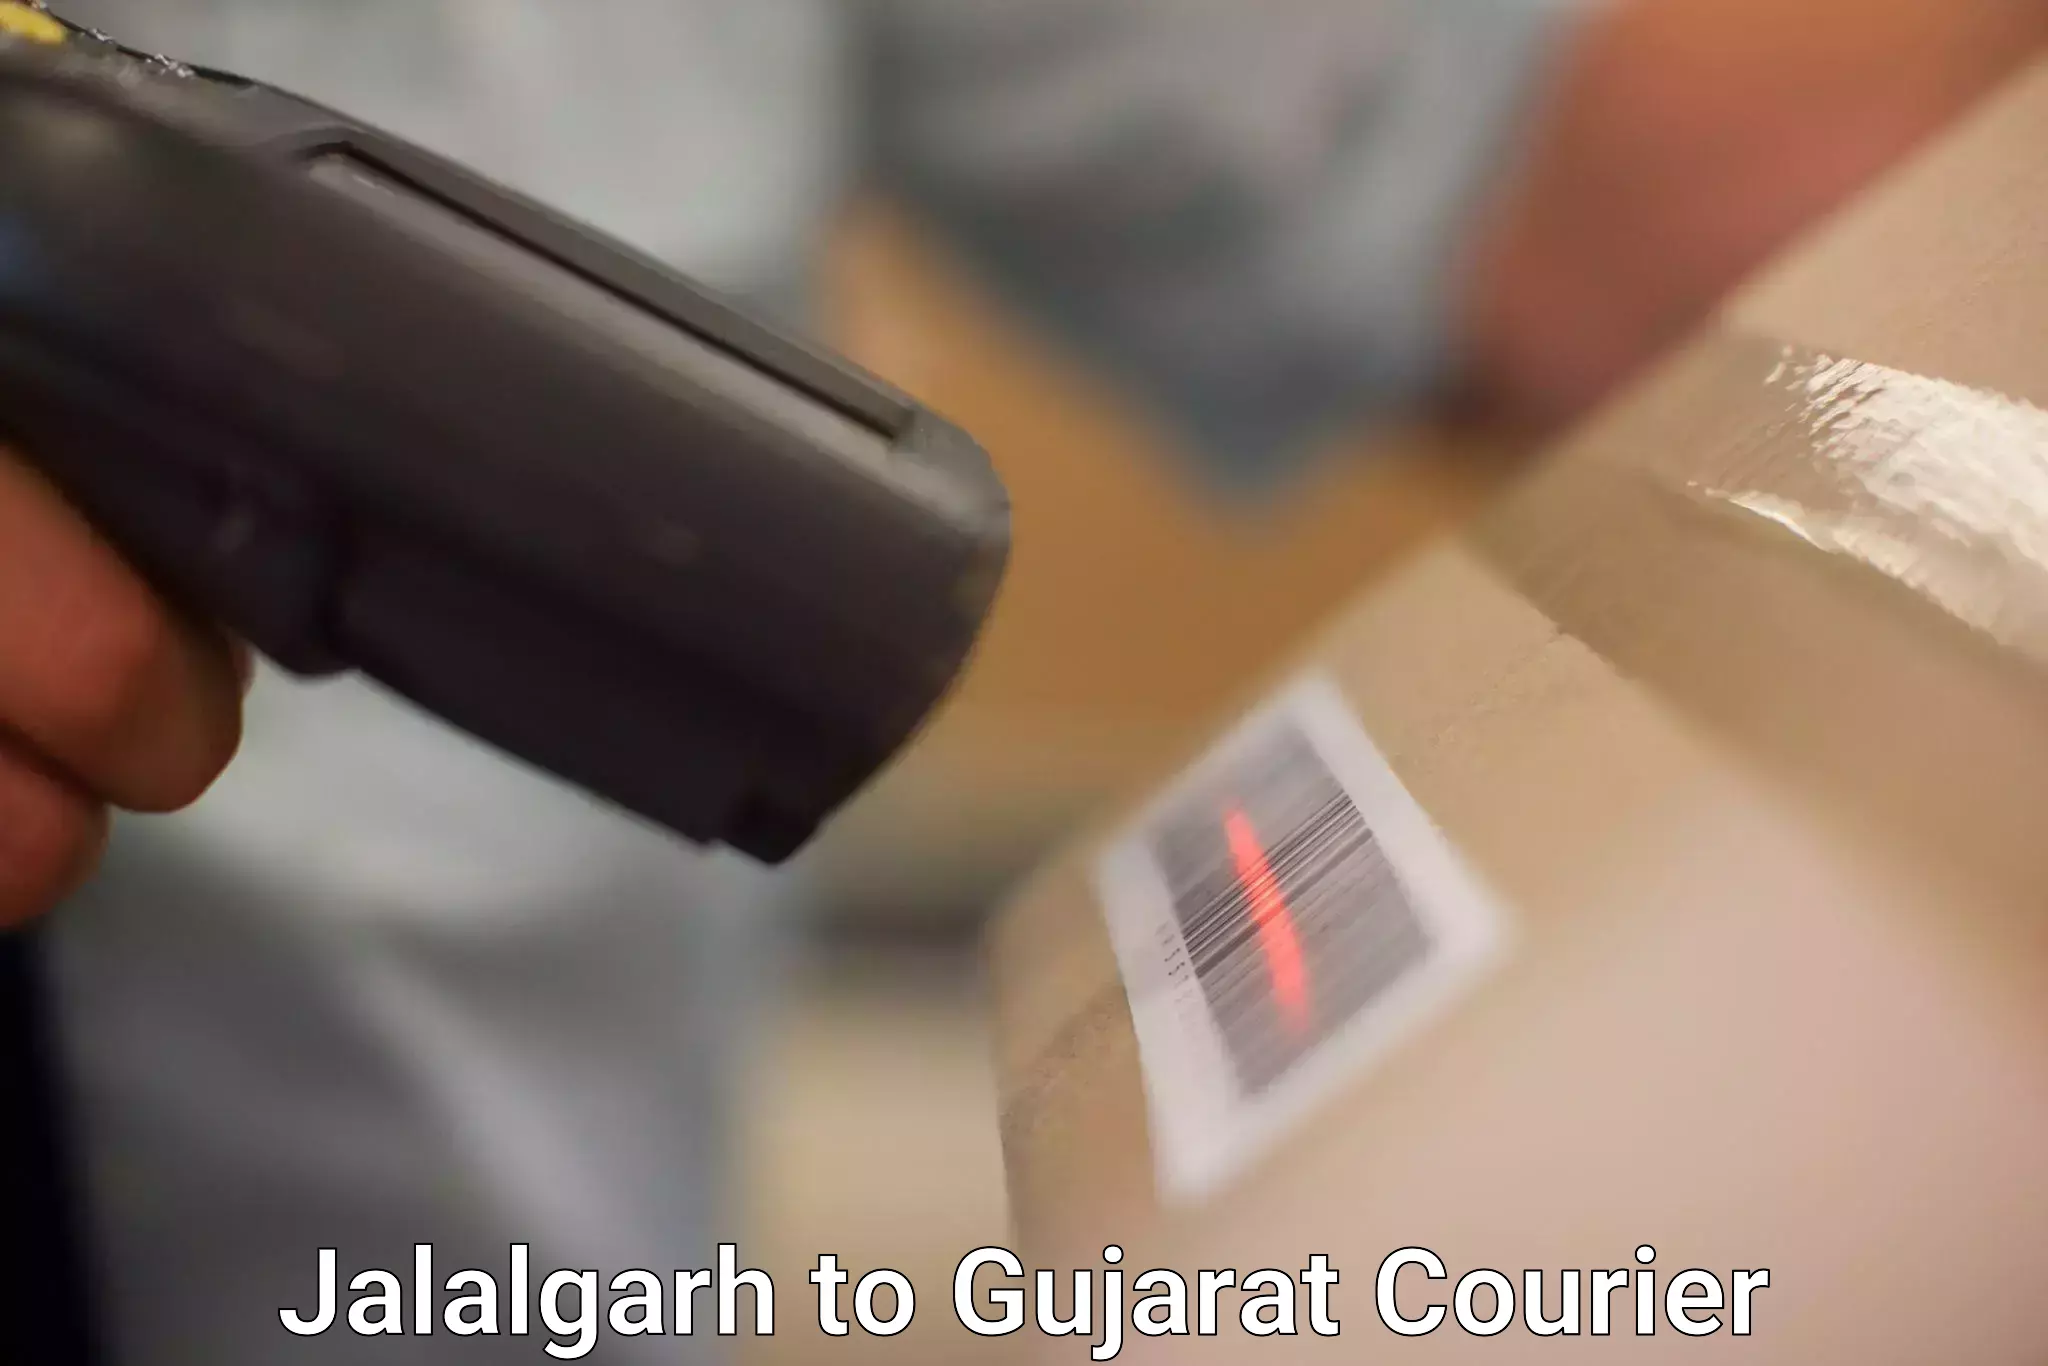 Courier service comparison in Jalalgarh to Kutiyana